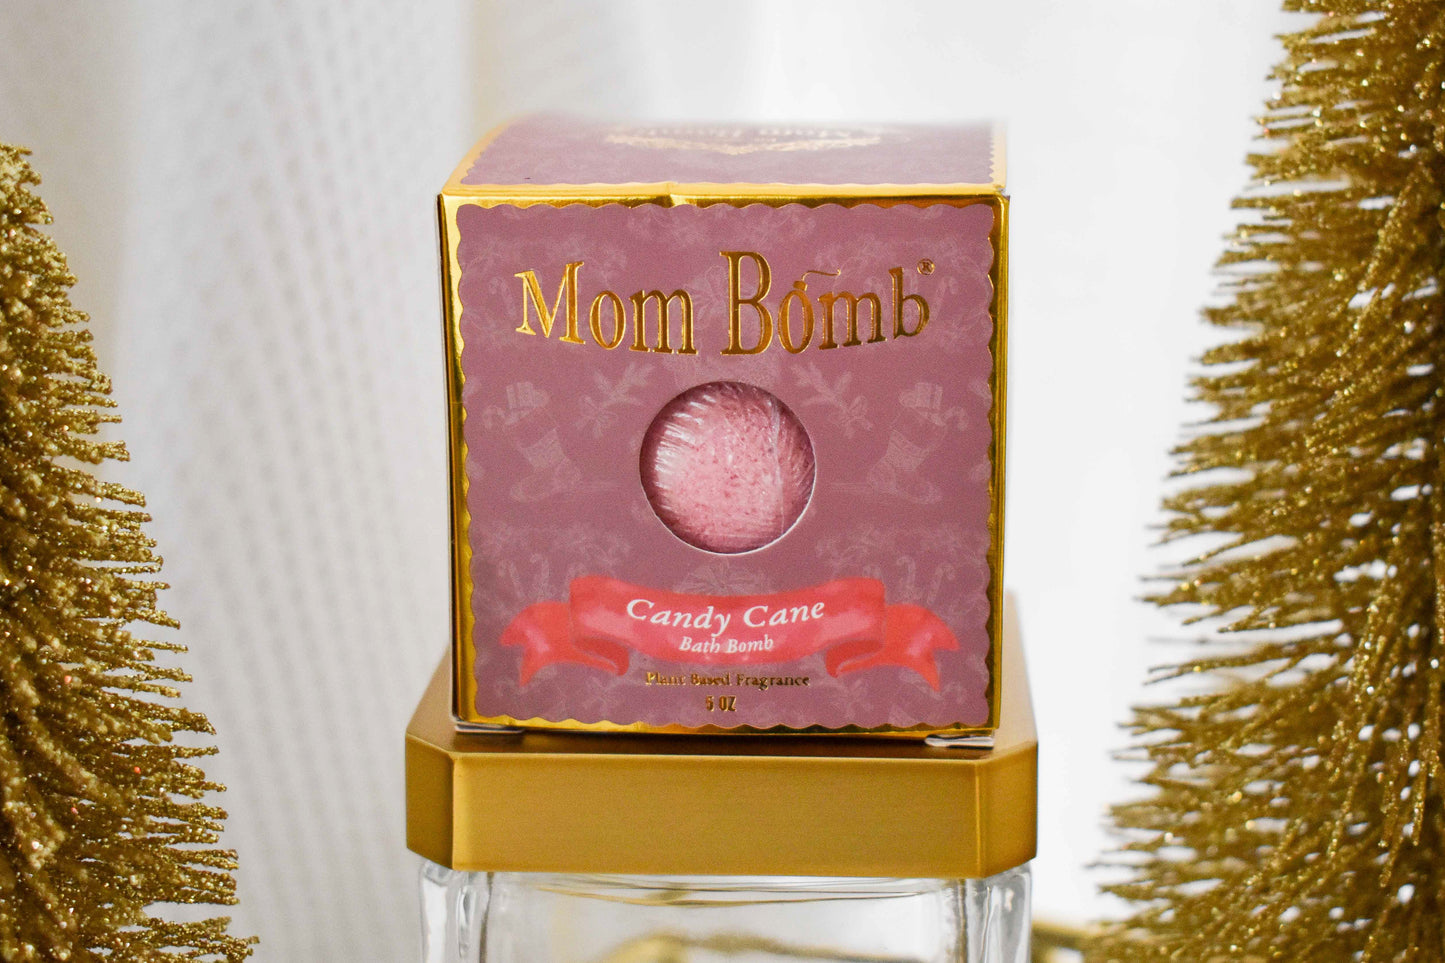 CANDY CANE BATH BOMB BY MOM BOMB